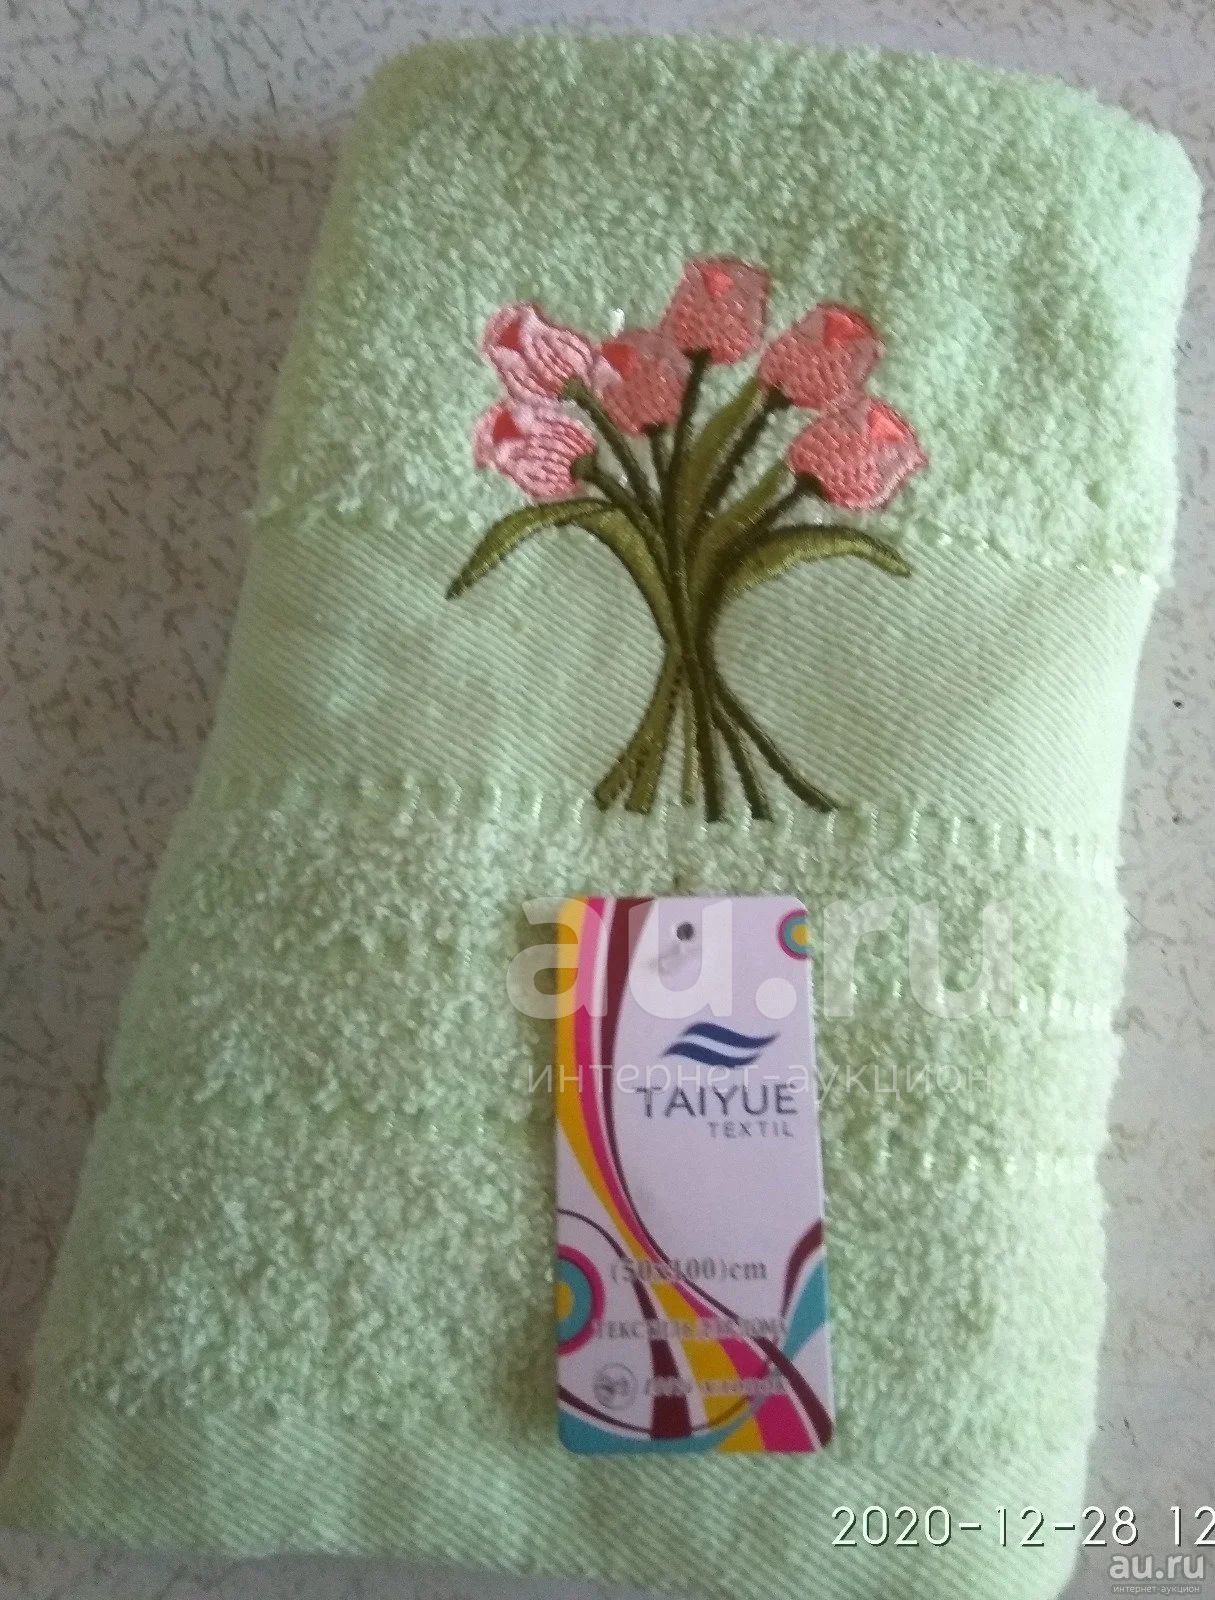 Полотенца красноярск. Taiyue Textil полотенца. Taiyue Textil полотенца 70 140 хлопок. Taiyue Textil полотенца производитель. Taiyue Textil производитель.